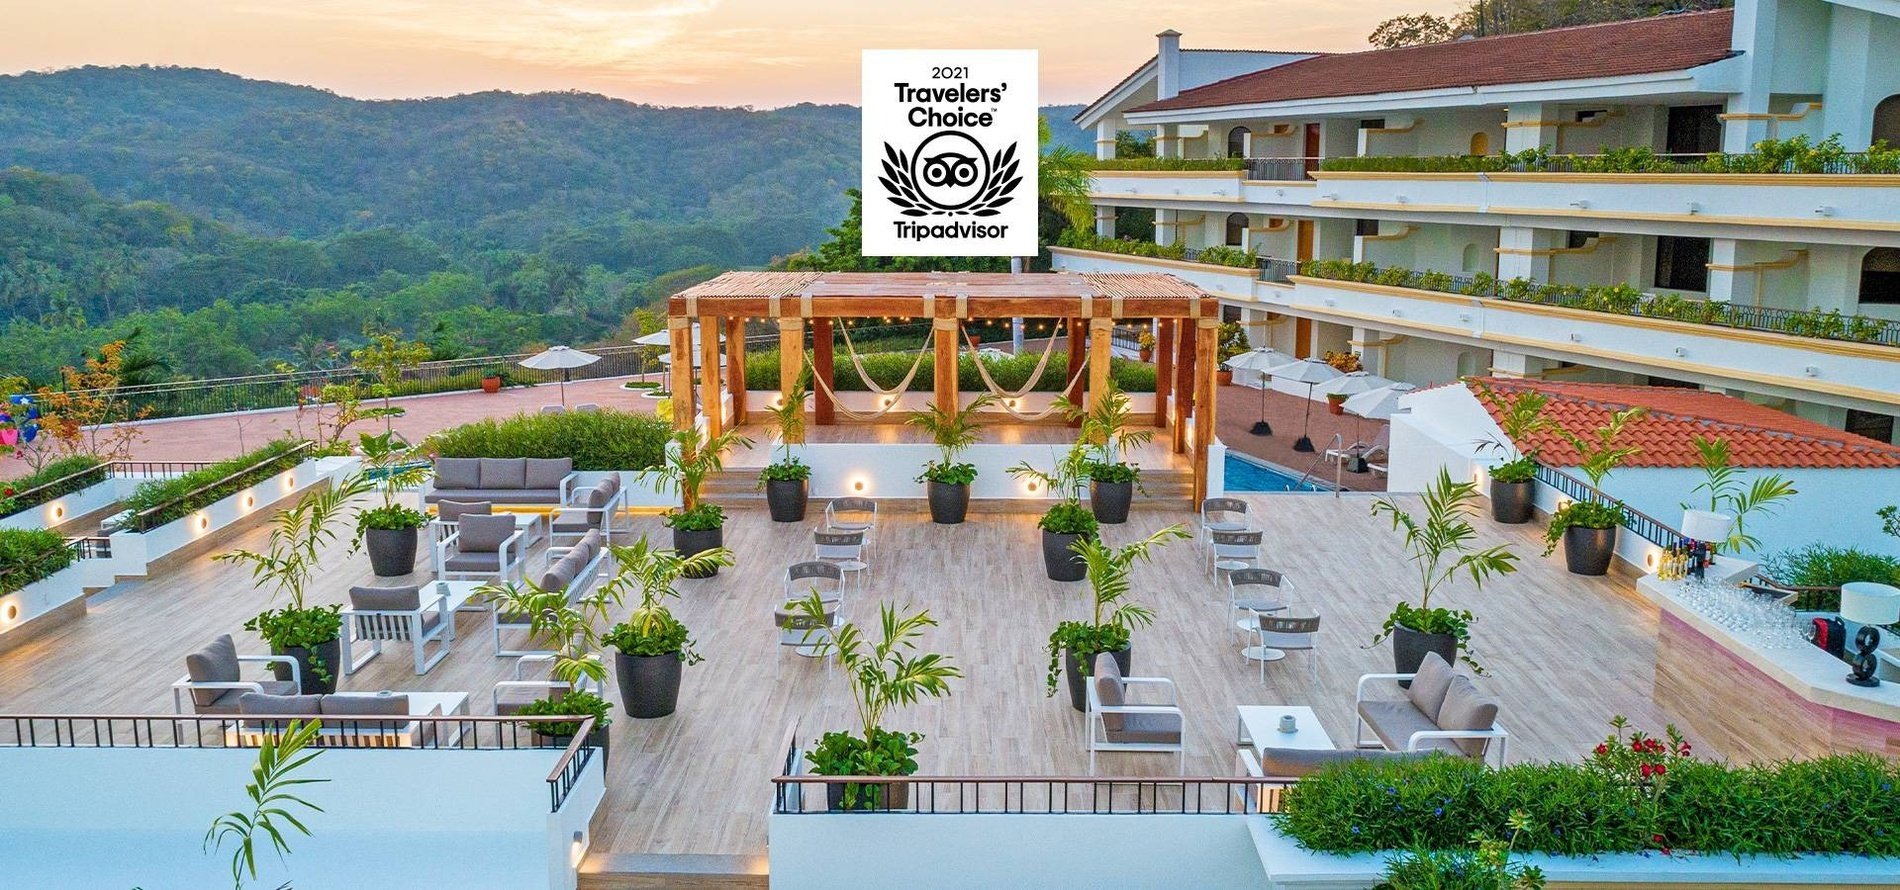 Premio Travelers Choice 2021 por TripAdvisor al Hotel Park Royal Beach Huatulco en México